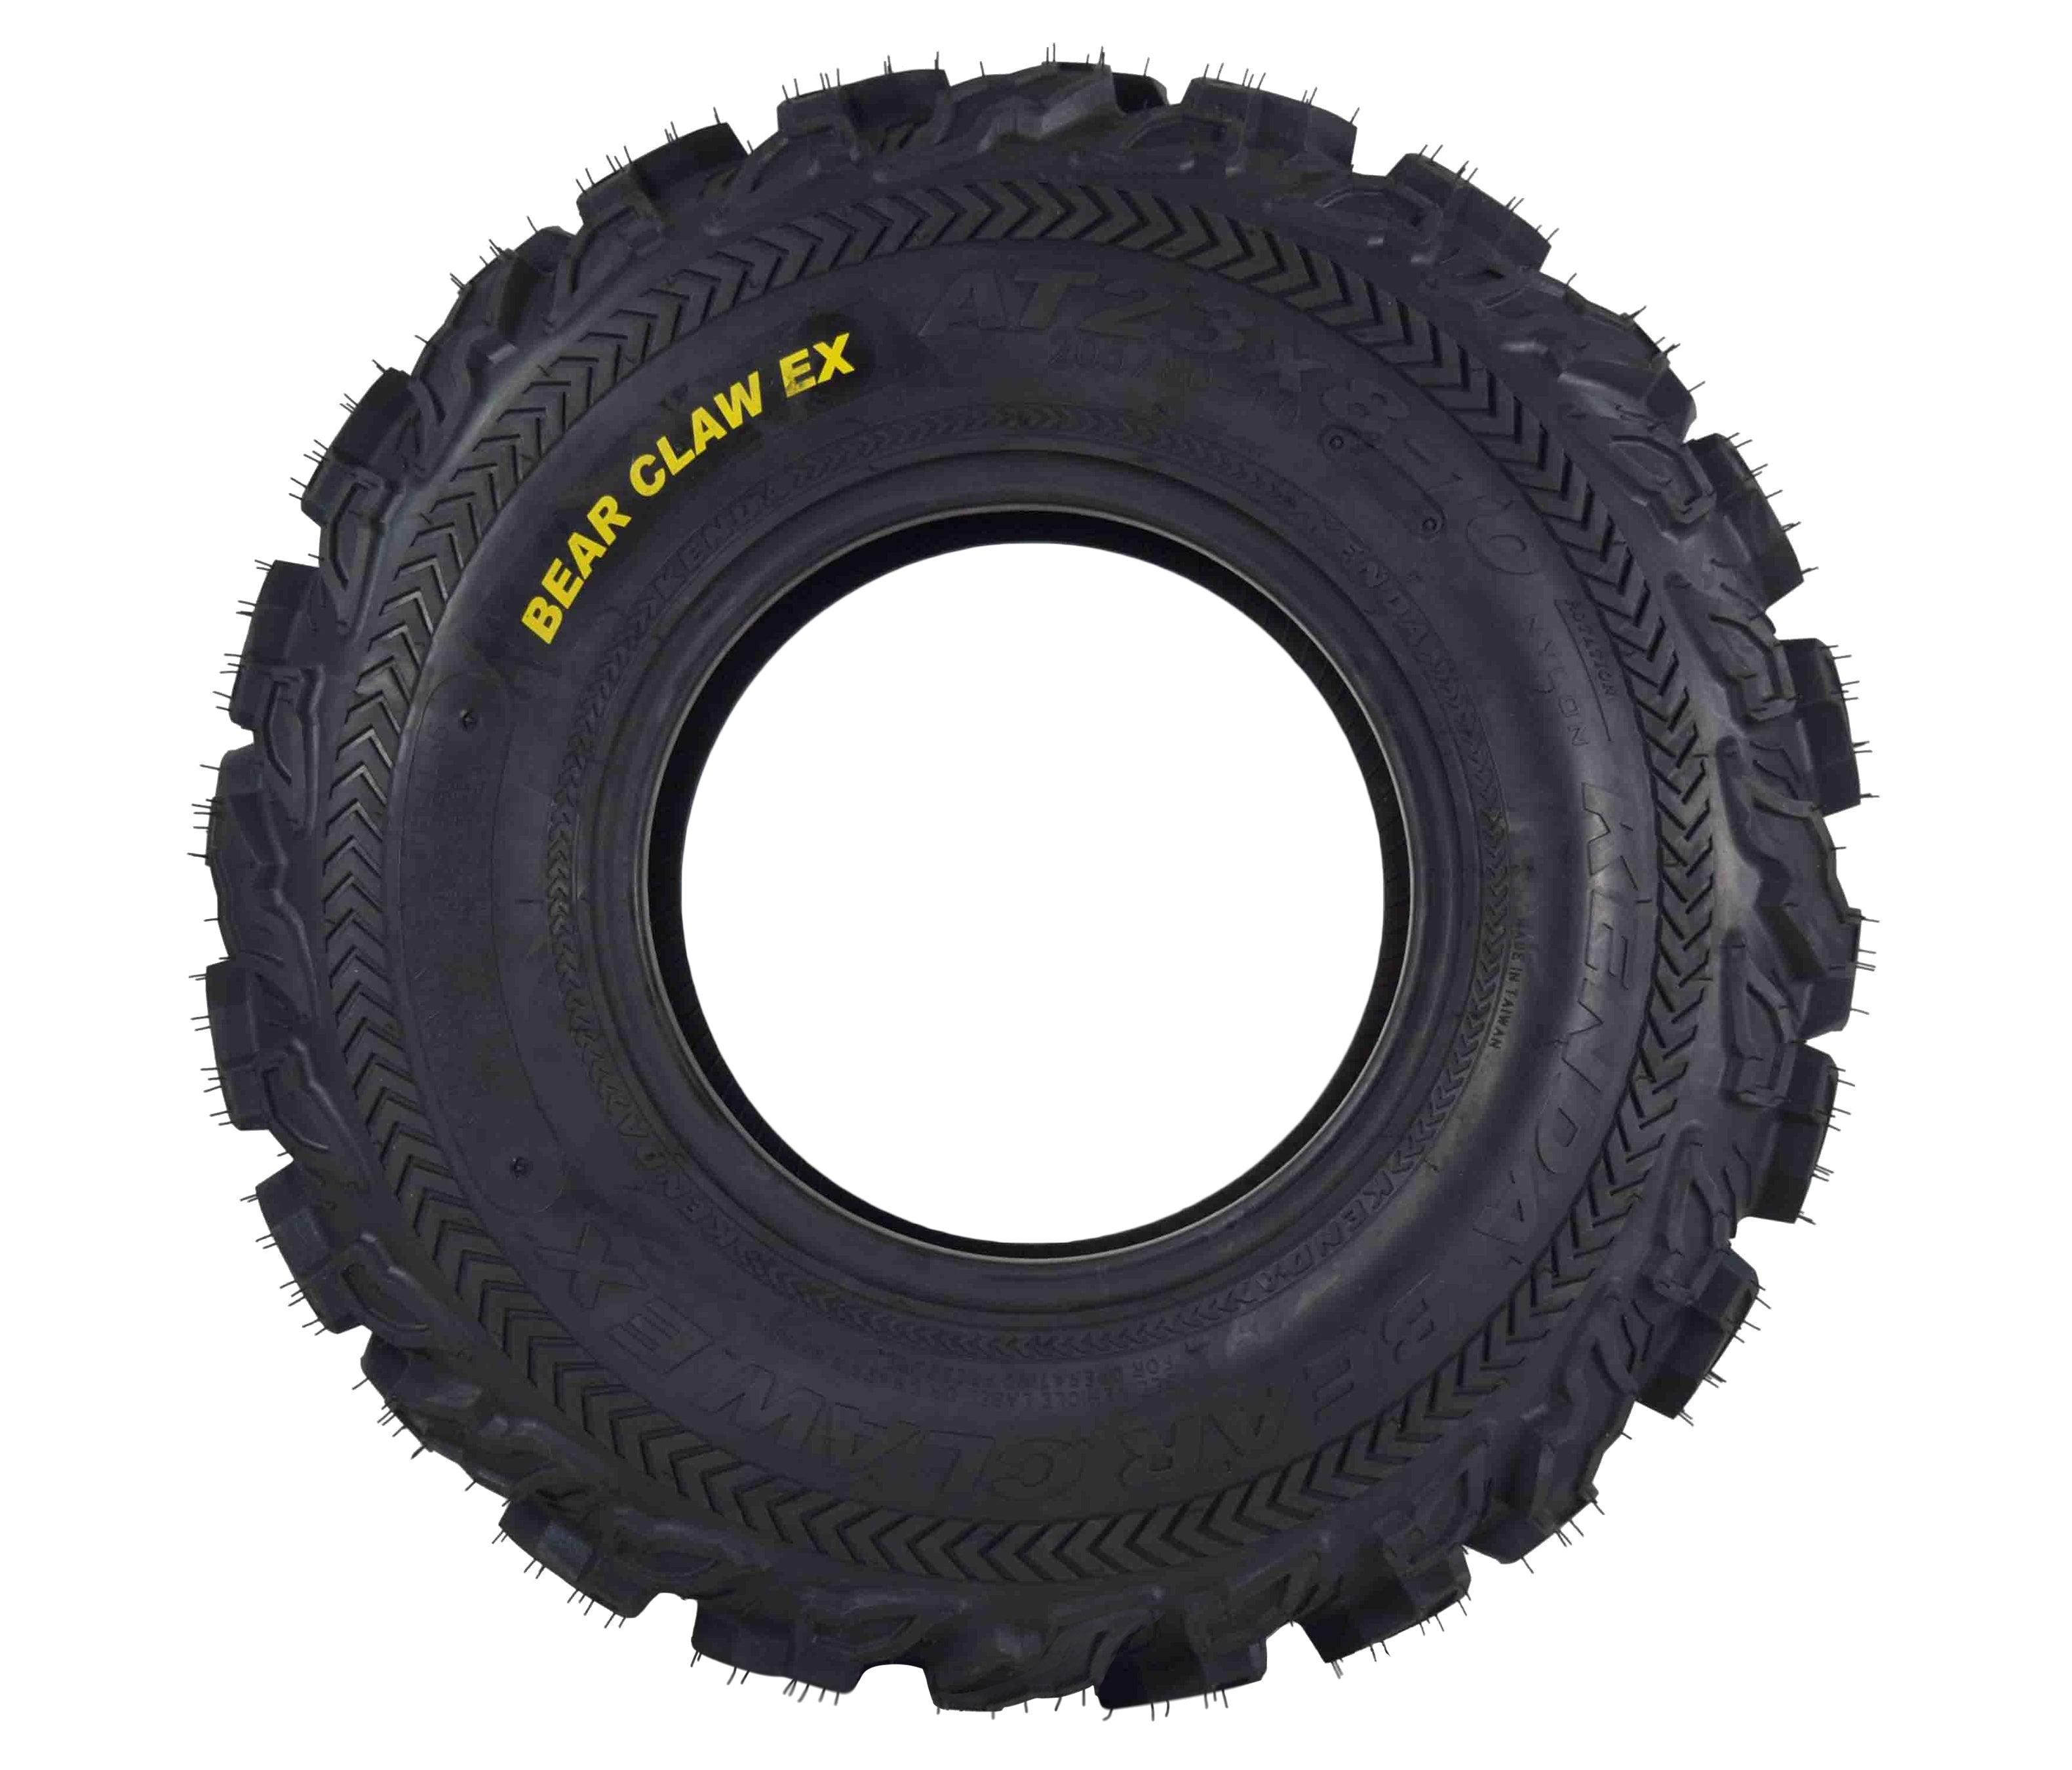 Kenda Bear Claw EX 23x8-10 F 23x10-10 R ATV Tires 6 PLY (4 Pack)